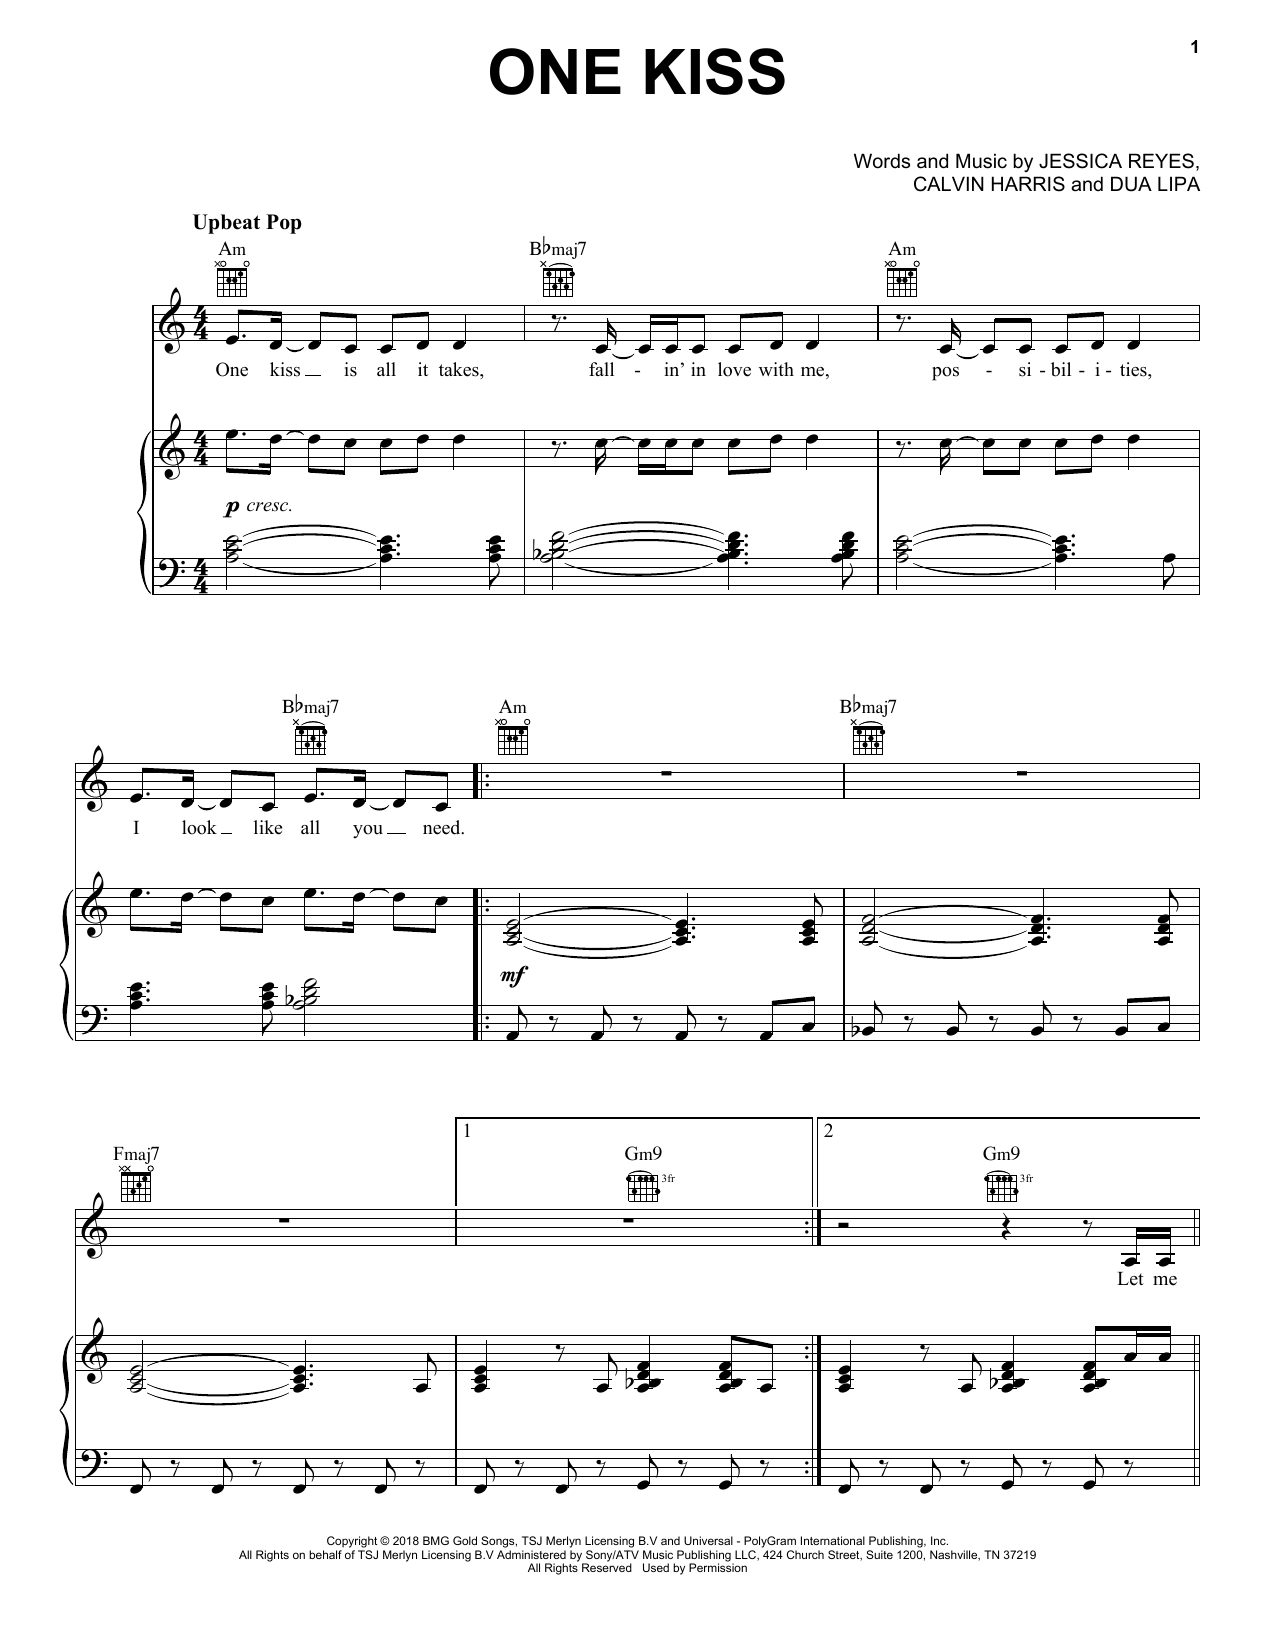 Calvin Harris & Dua Lipa One Kiss Sheet Music Notes & Chords for Piano, Vocal & Guitar (Right-Hand Melody) - Download or Print PDF